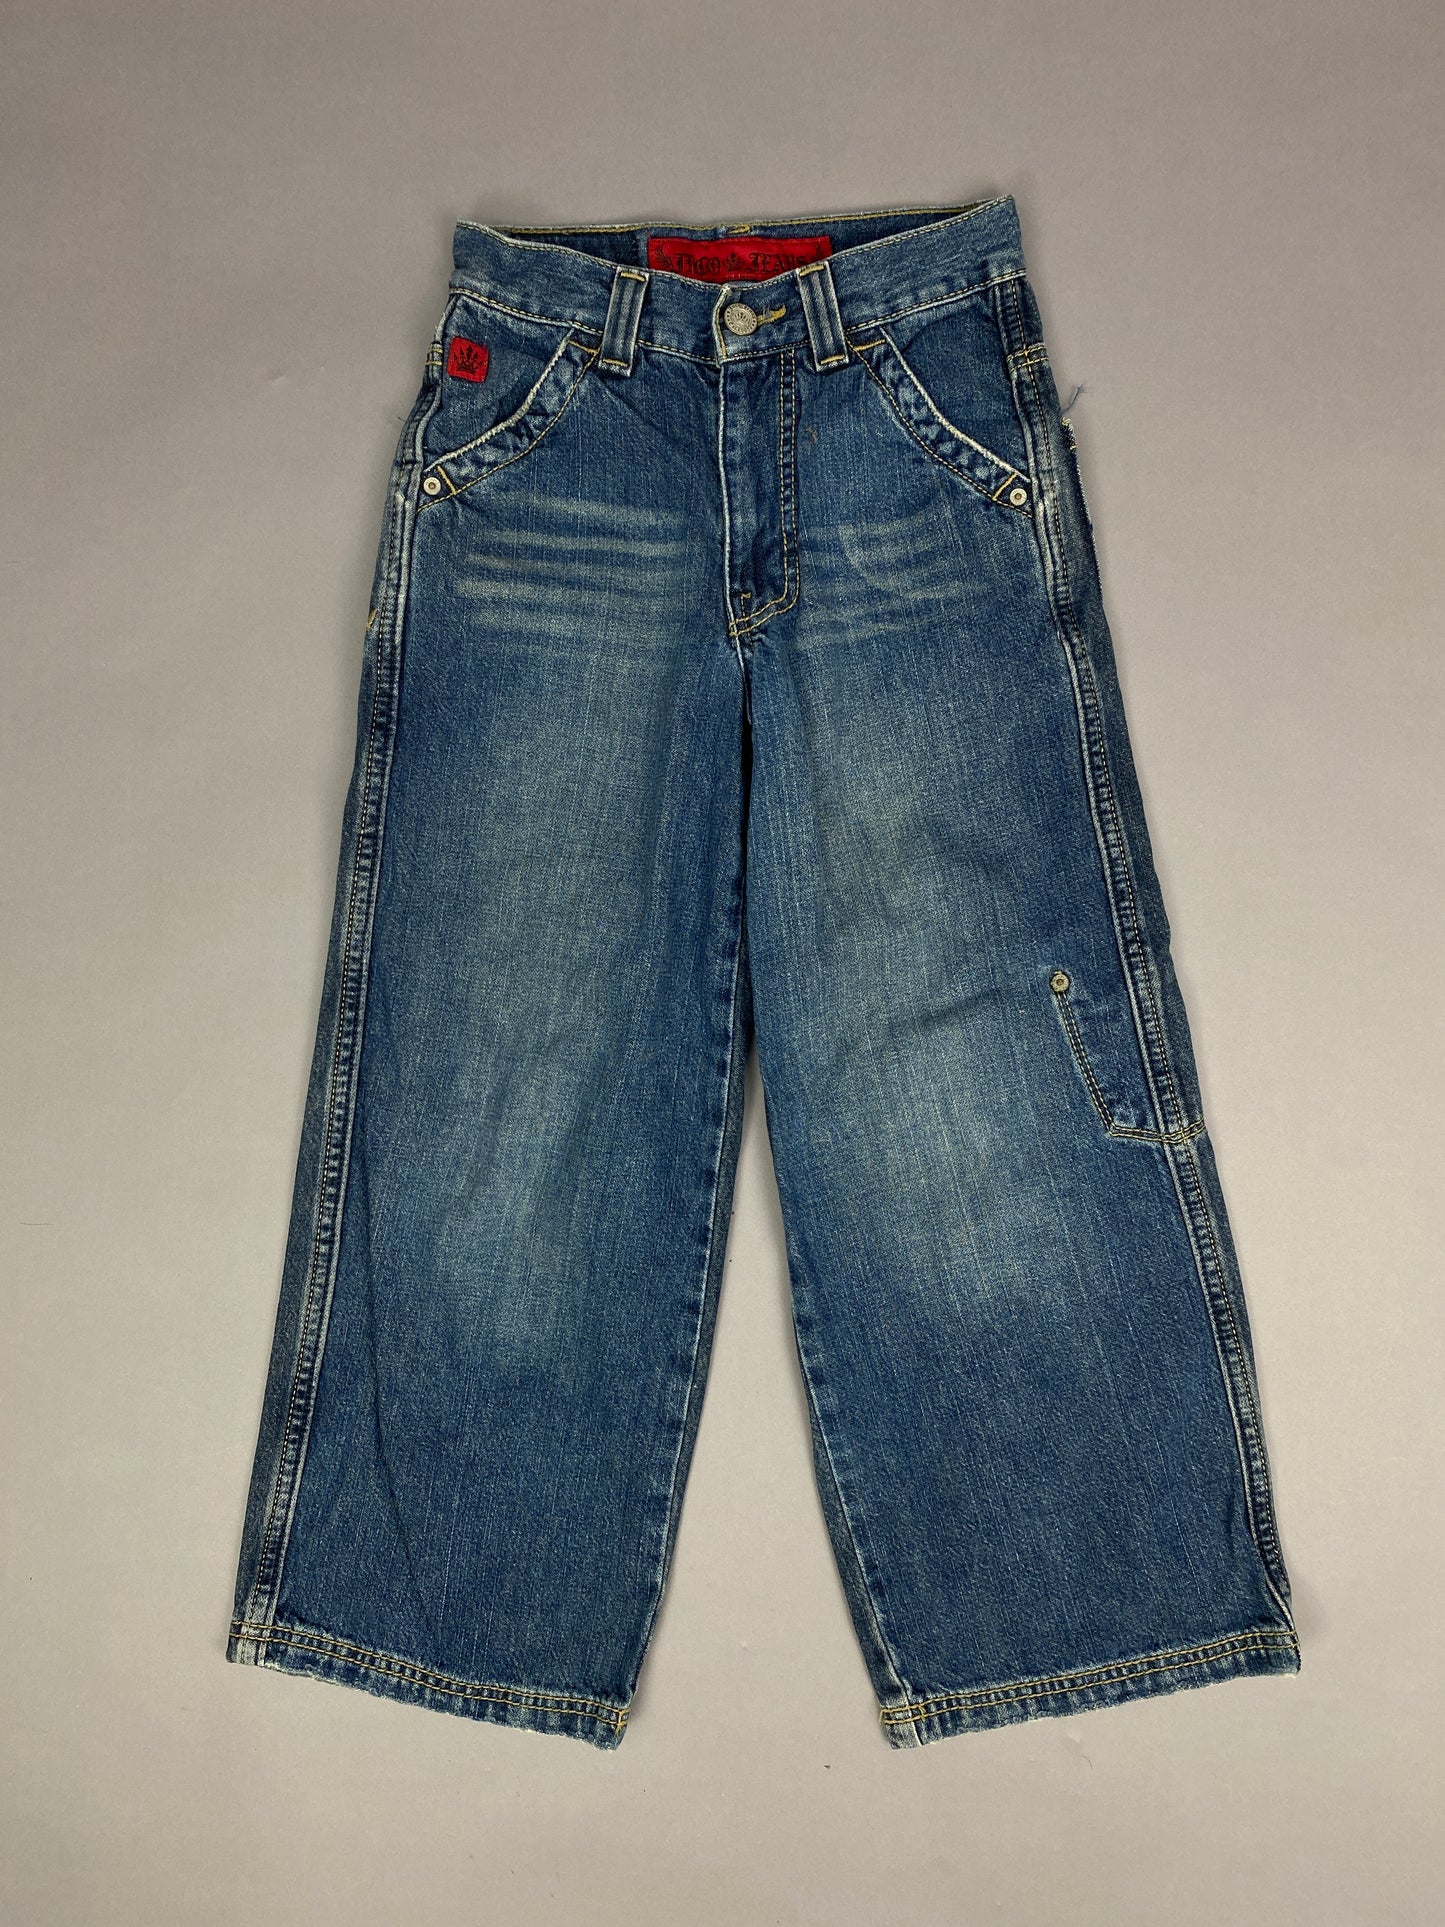 JNCO Wide Vintage Jeans - Petite 8